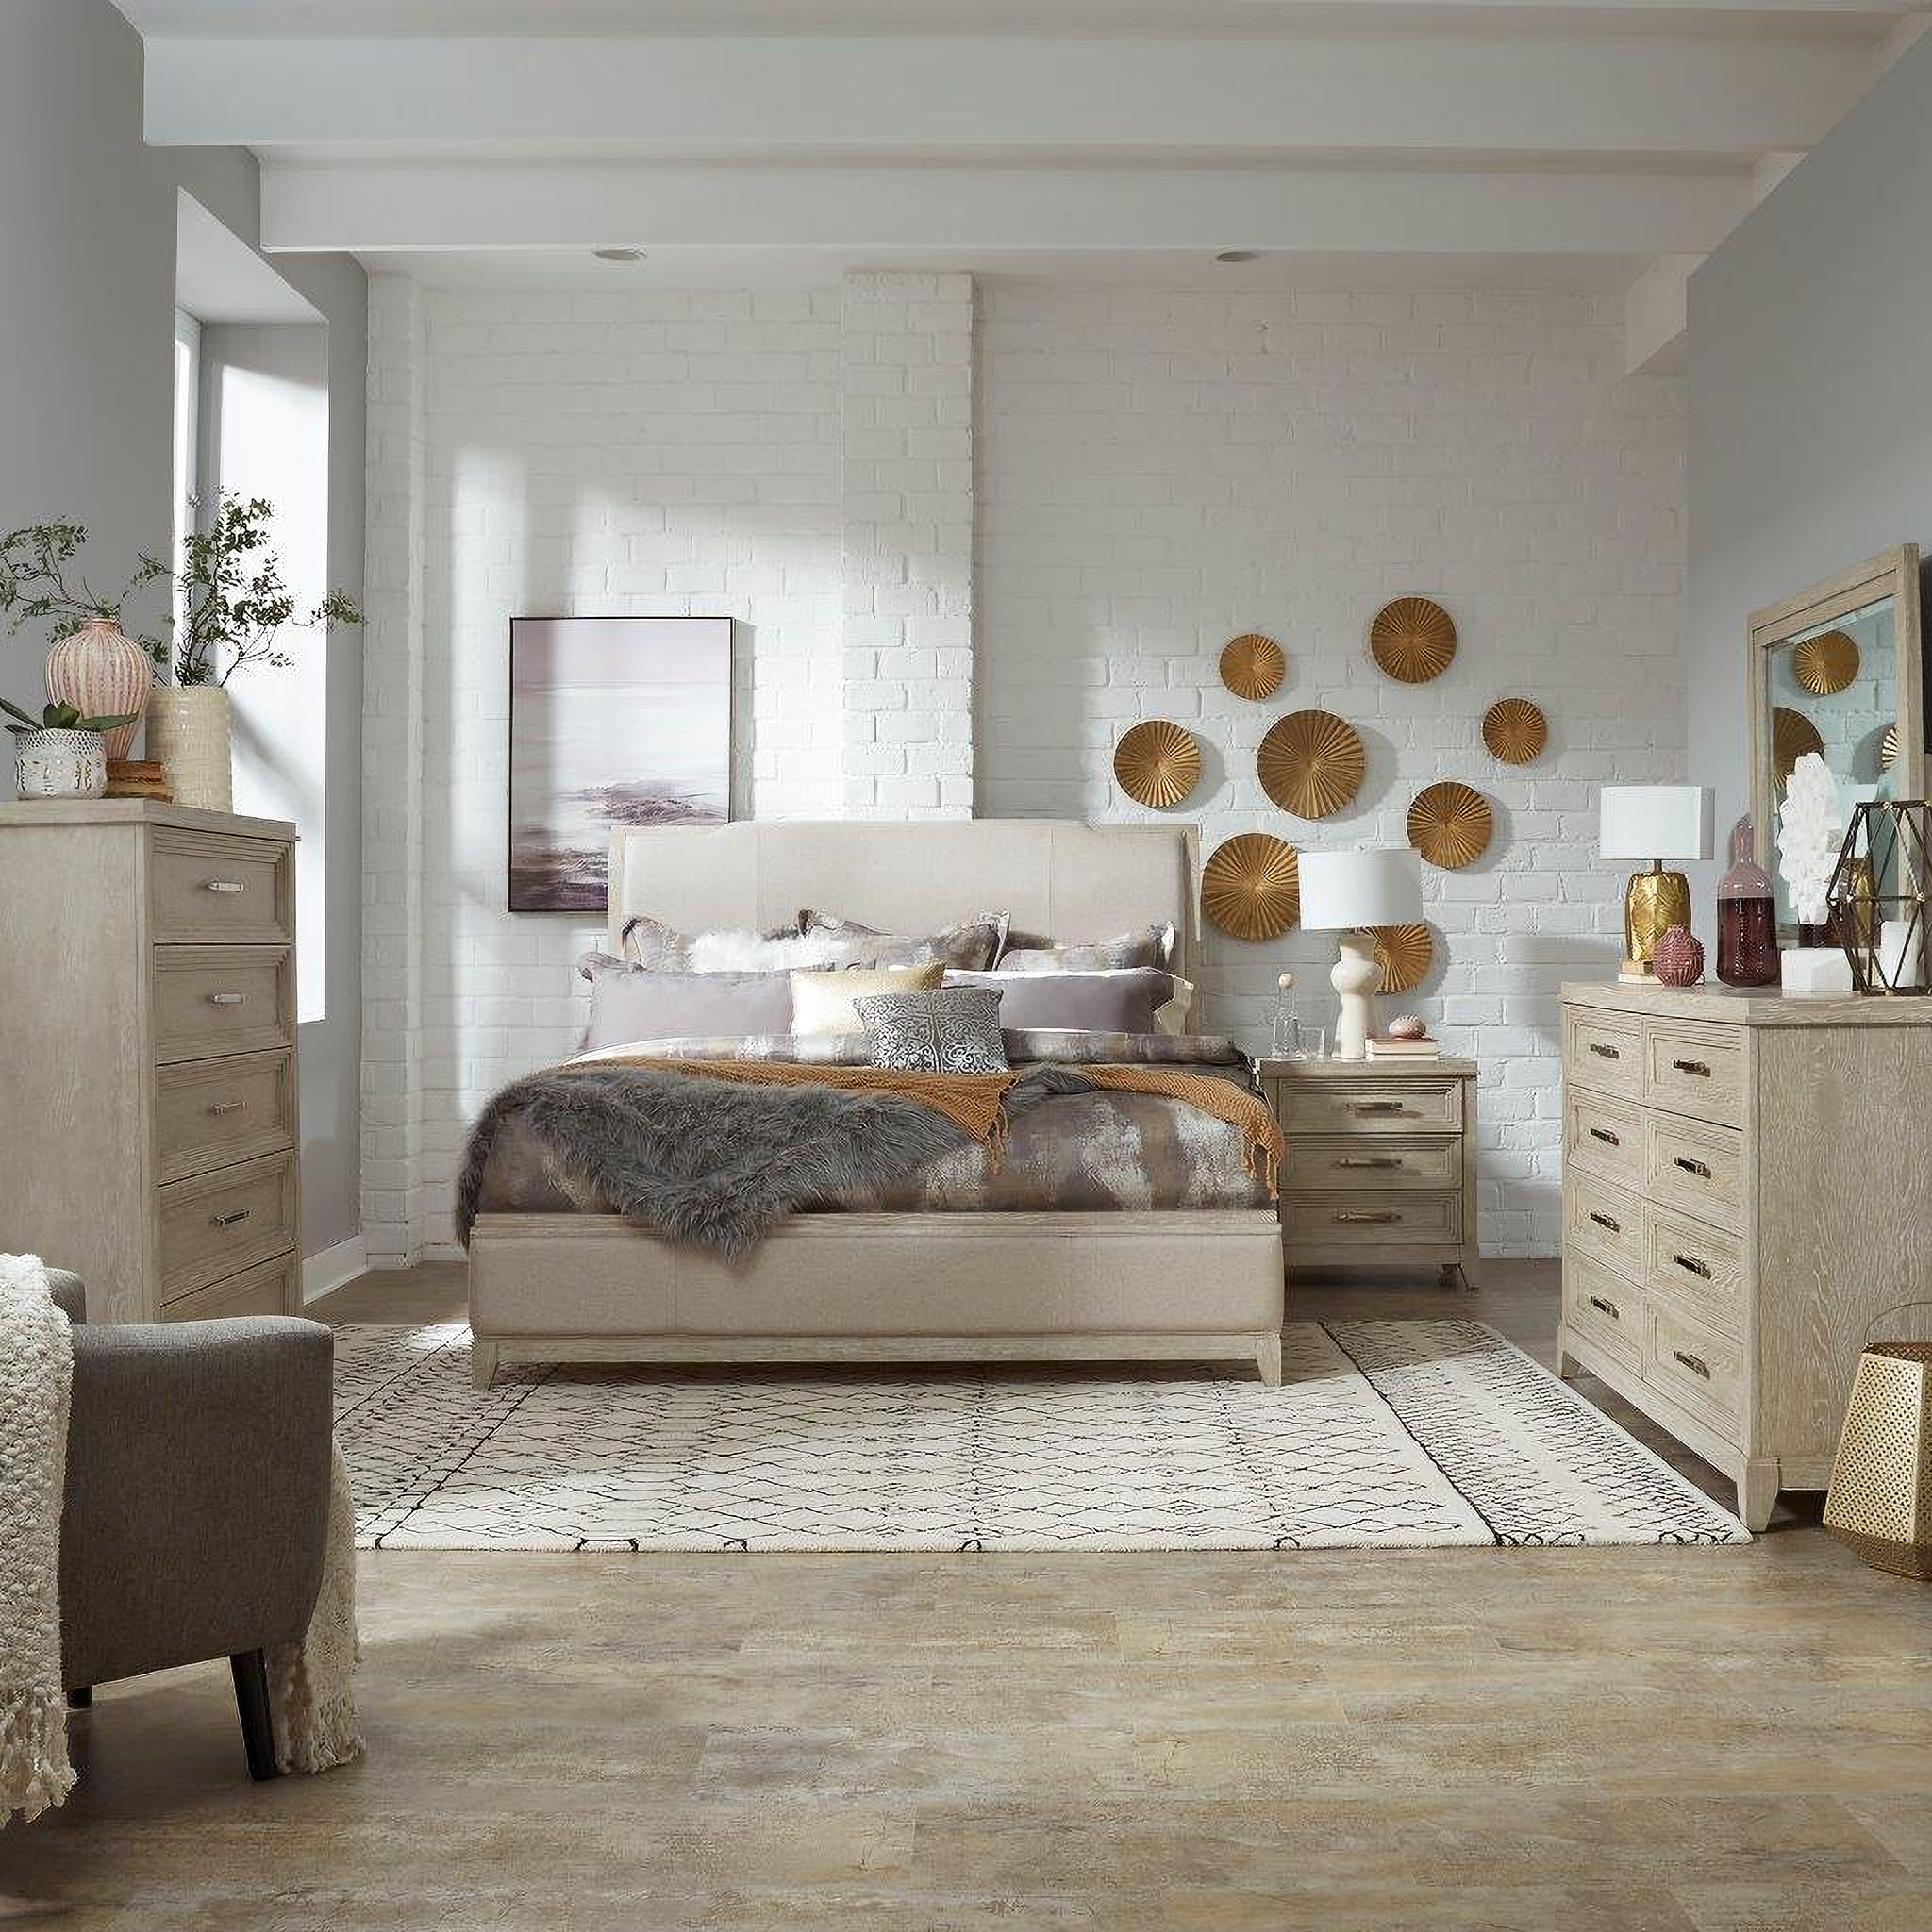 Glory Furniture G3150 Trundle Bedroom Set in Black - 1StopBedrooms